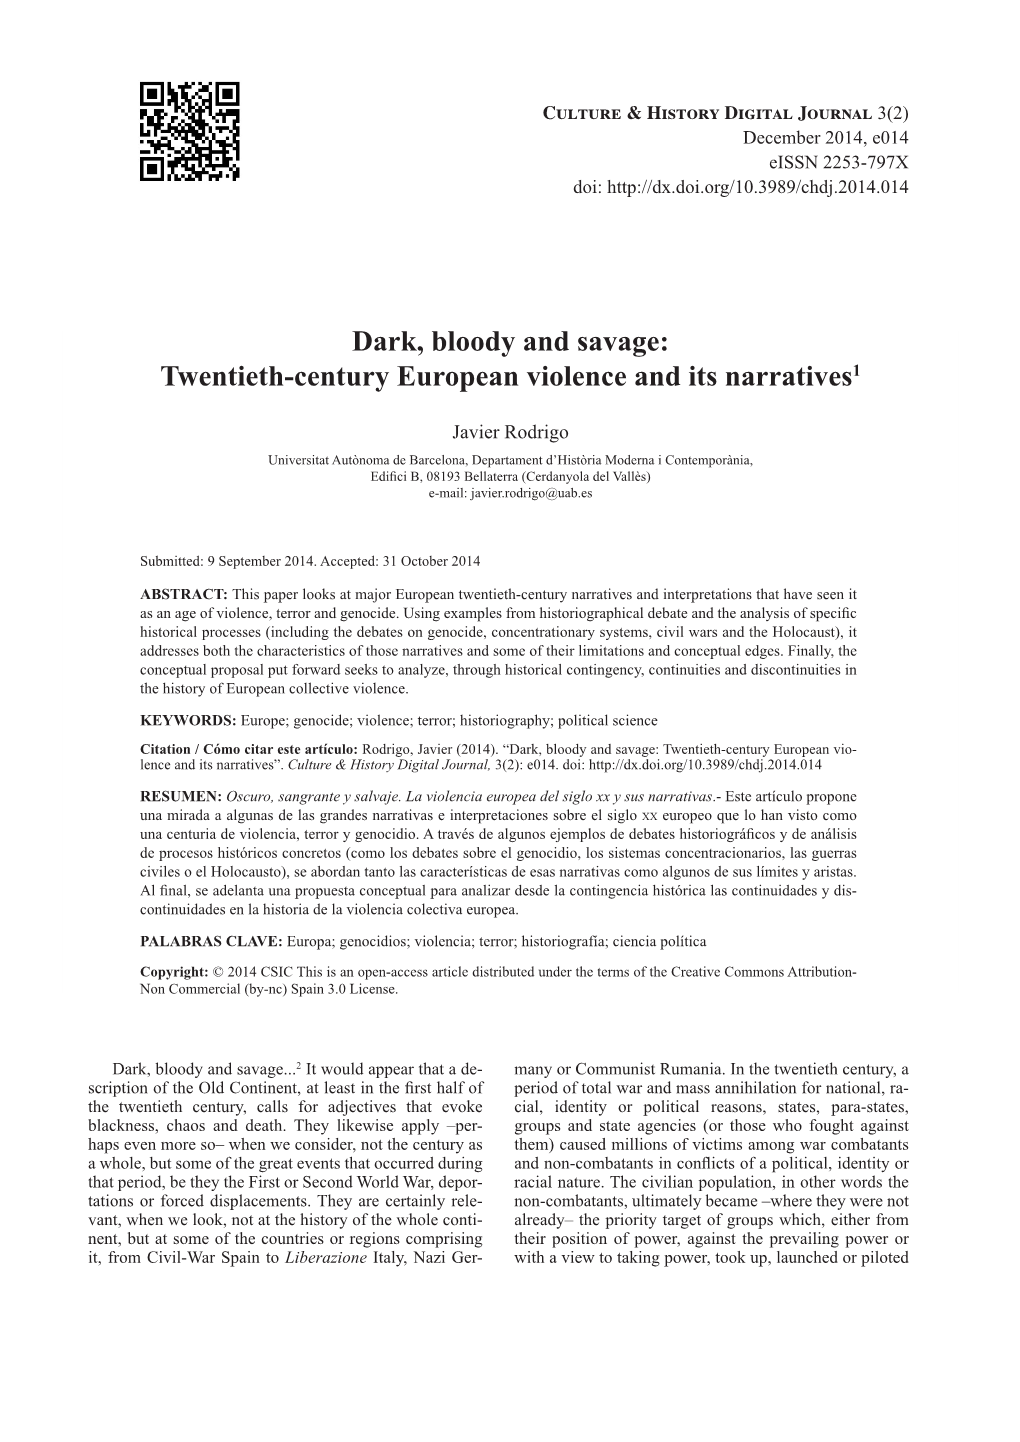 Twentieth-Century European Violence and Its Narratives1